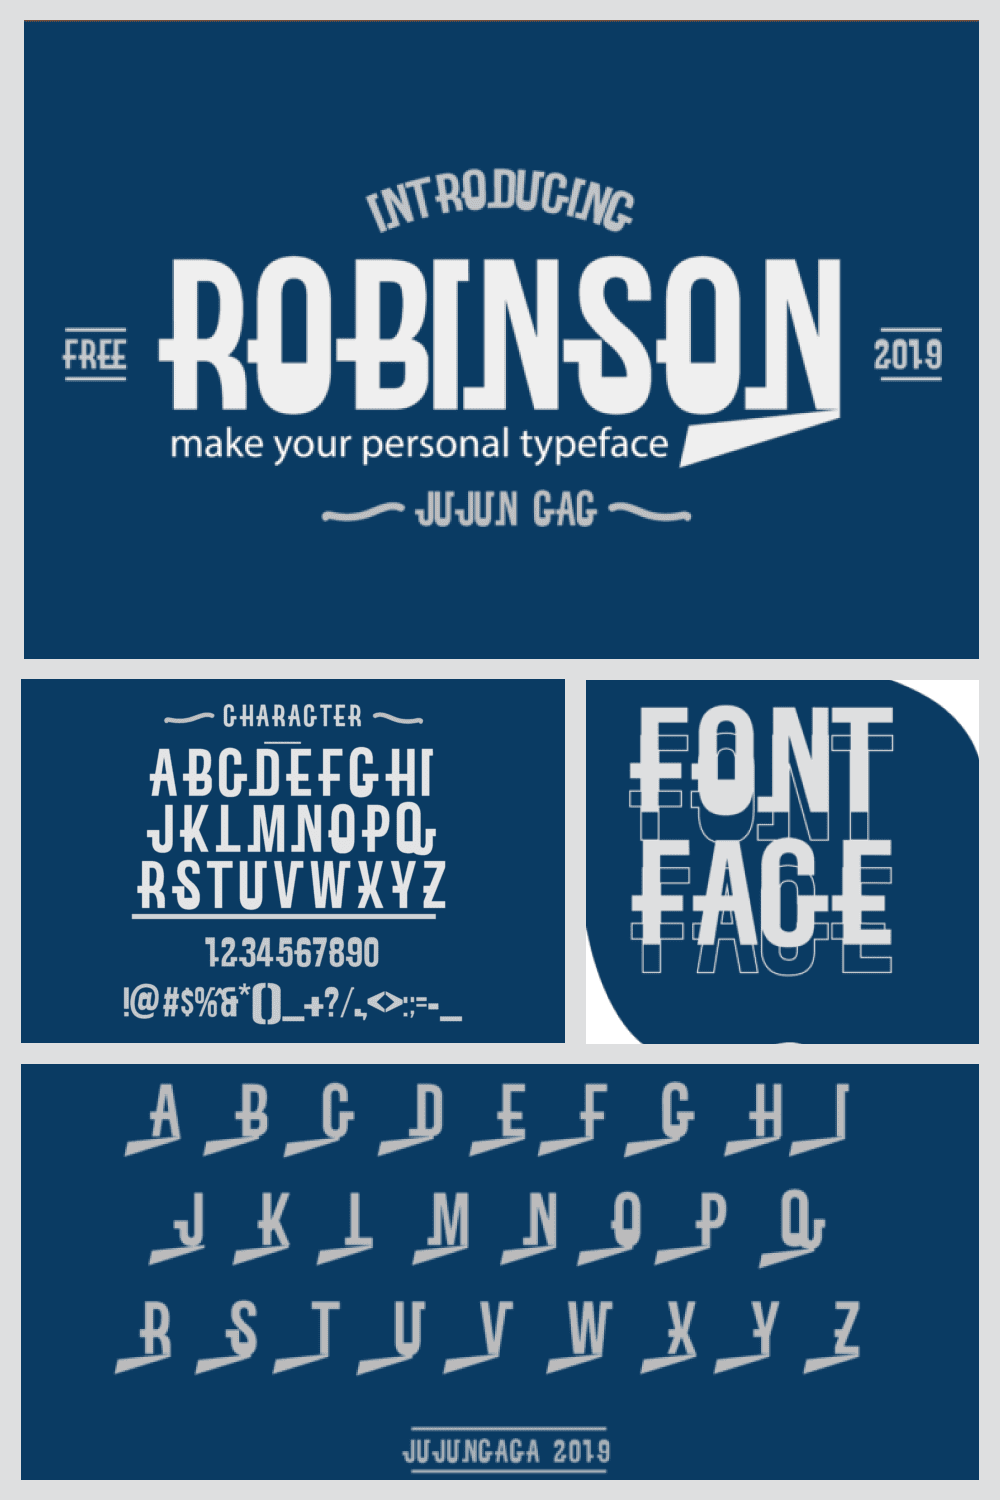 Robinson Classic Font - MasterBundles - Pinterest Collage Image.